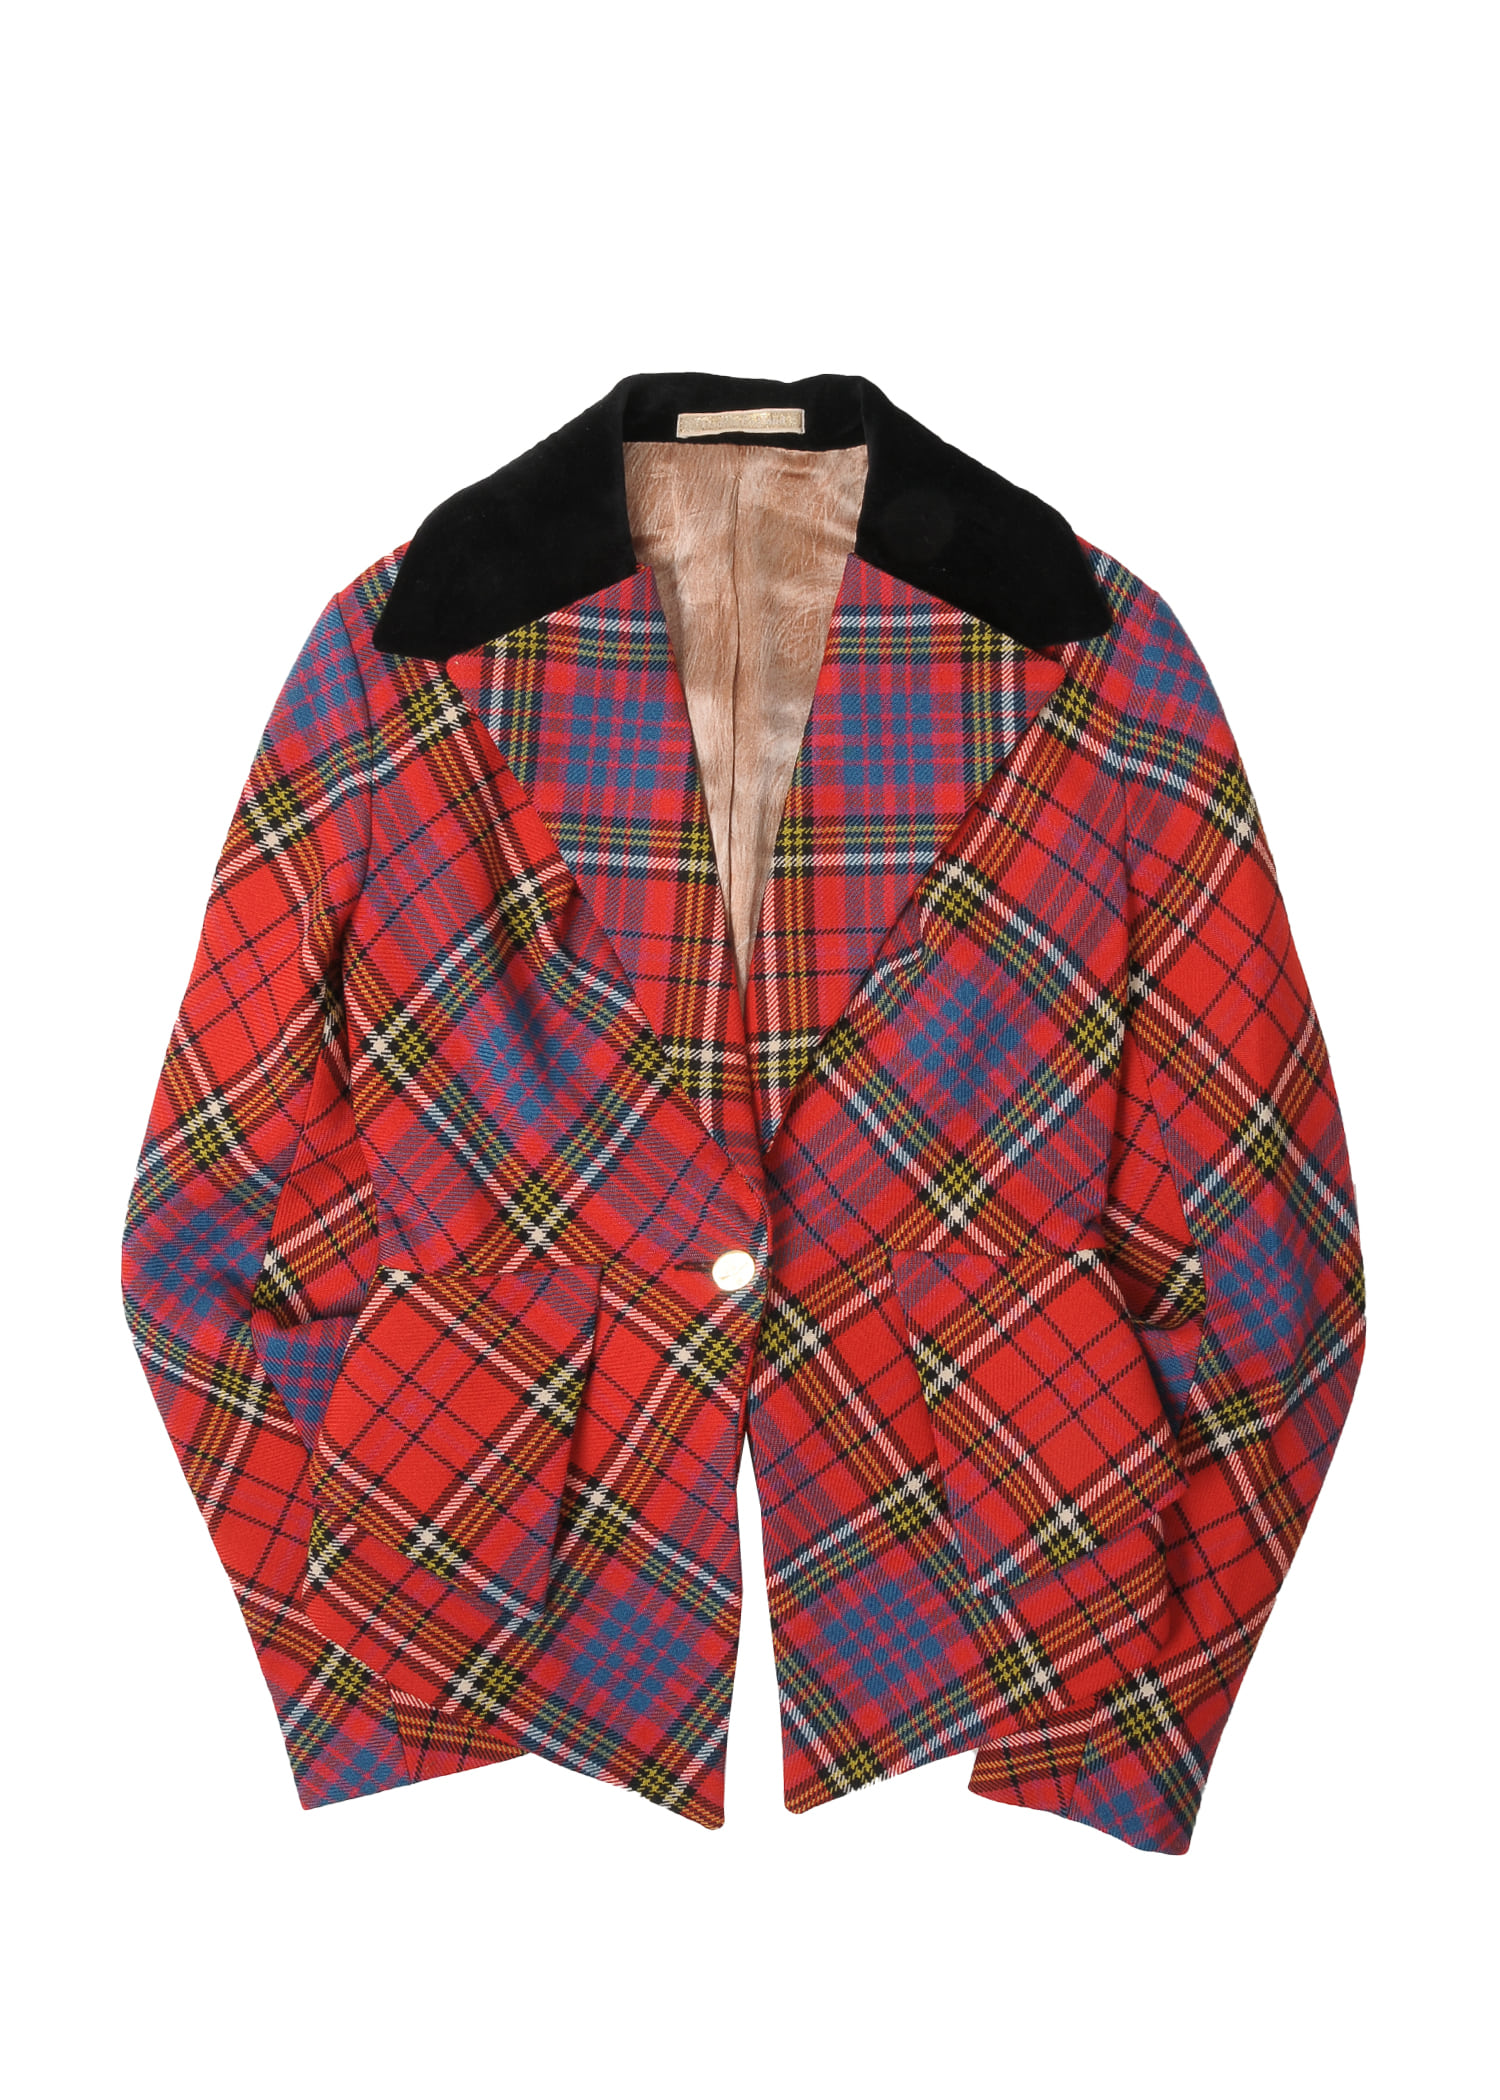 Vivienne Westwood archive tartancheck tailored jacket